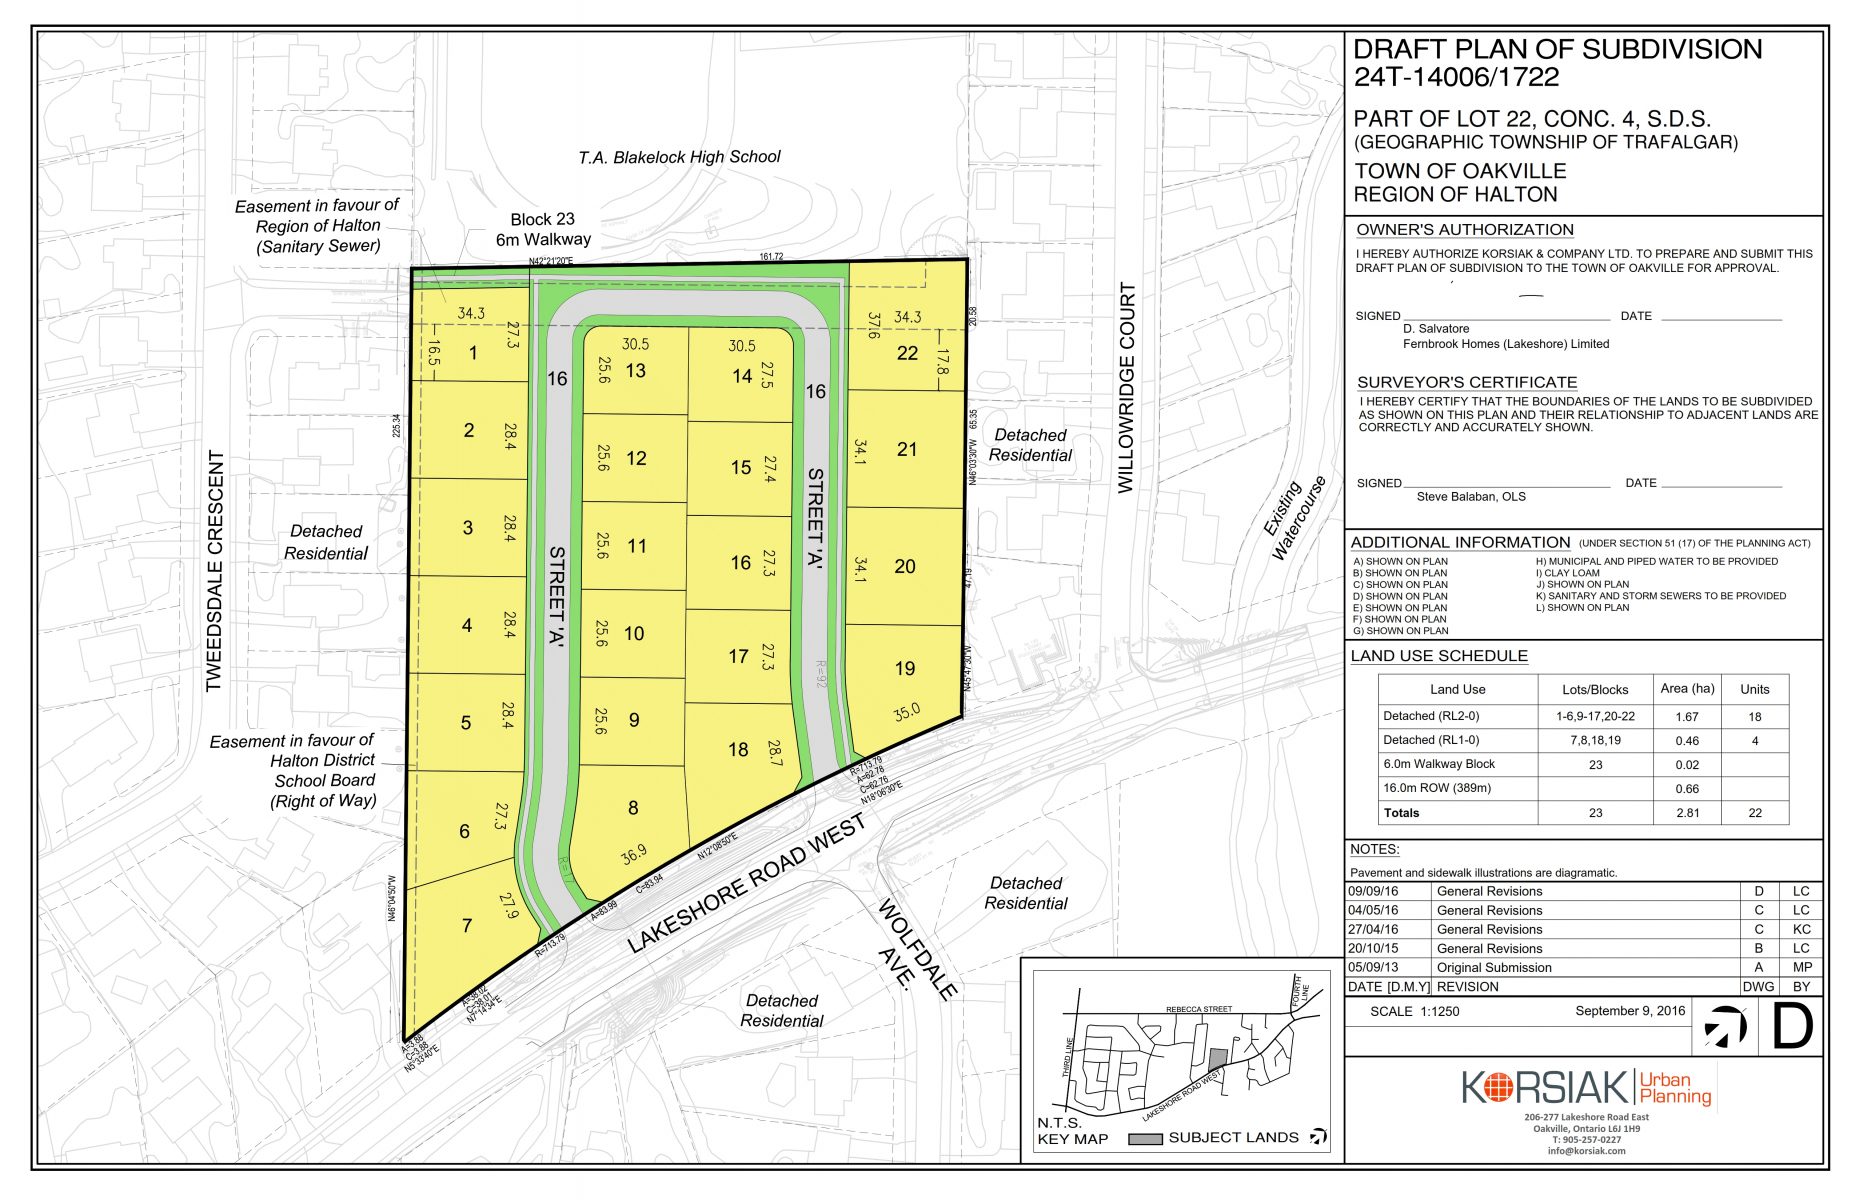 Korsiak Urban Planning - Oakville Portfolio - Lakeshore Road West, Infill Development - Oakville, Ontario